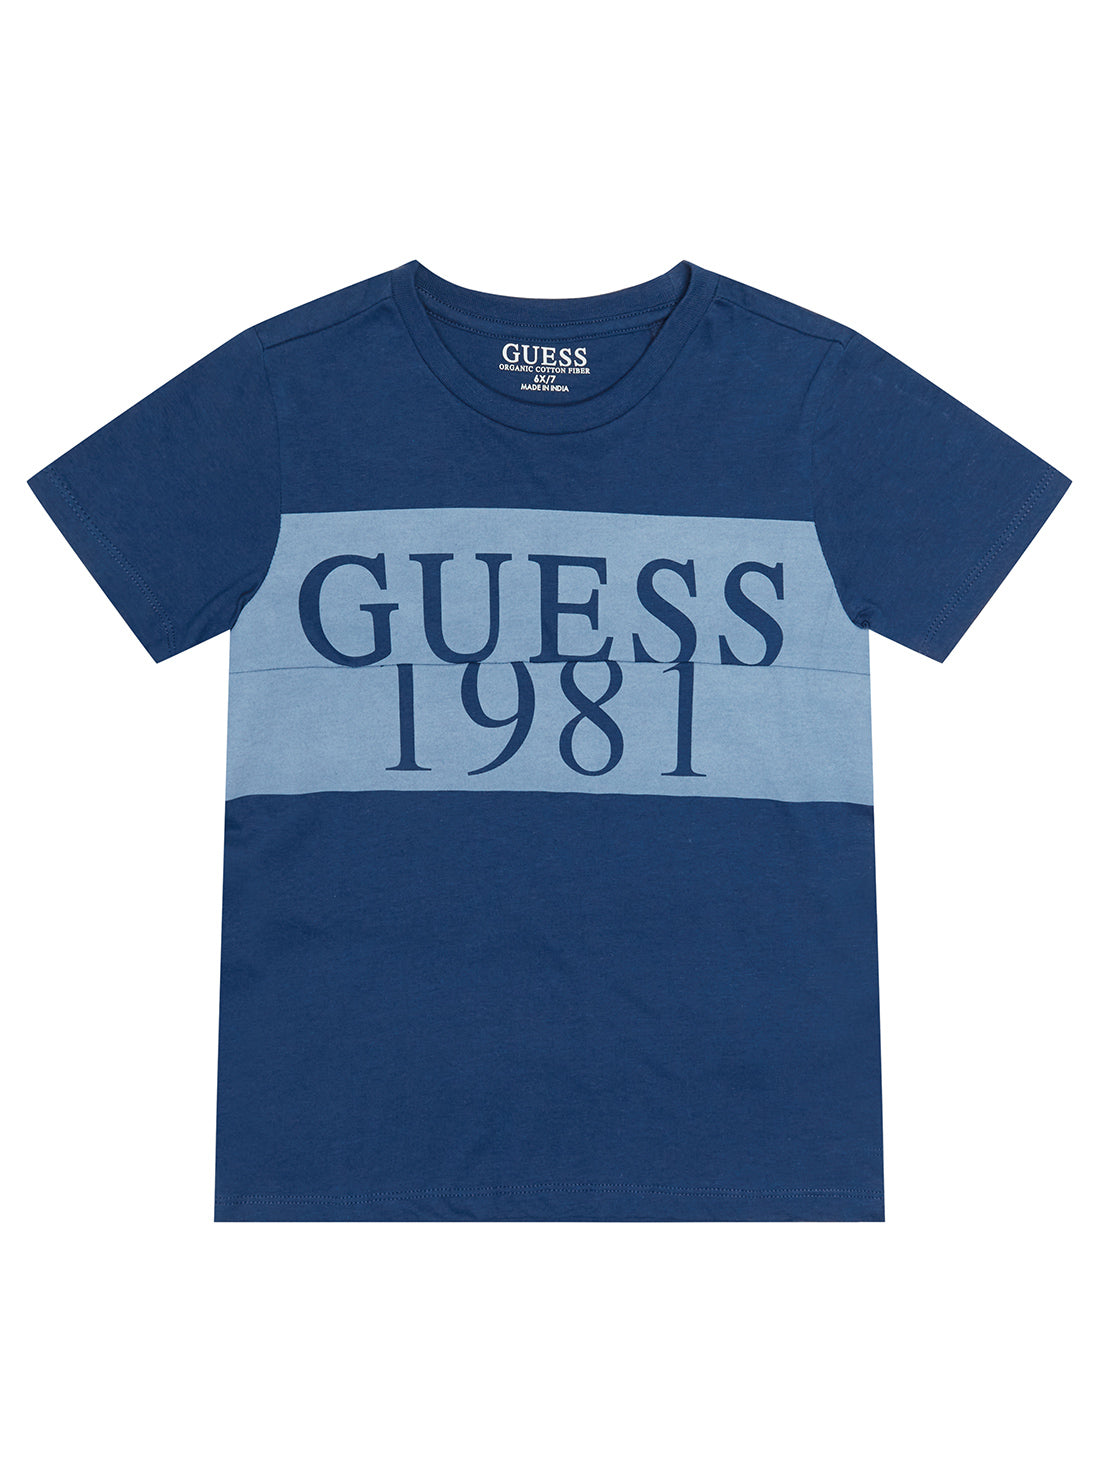 Boy's Navy Blue 1981 Logo T-Shirt front view